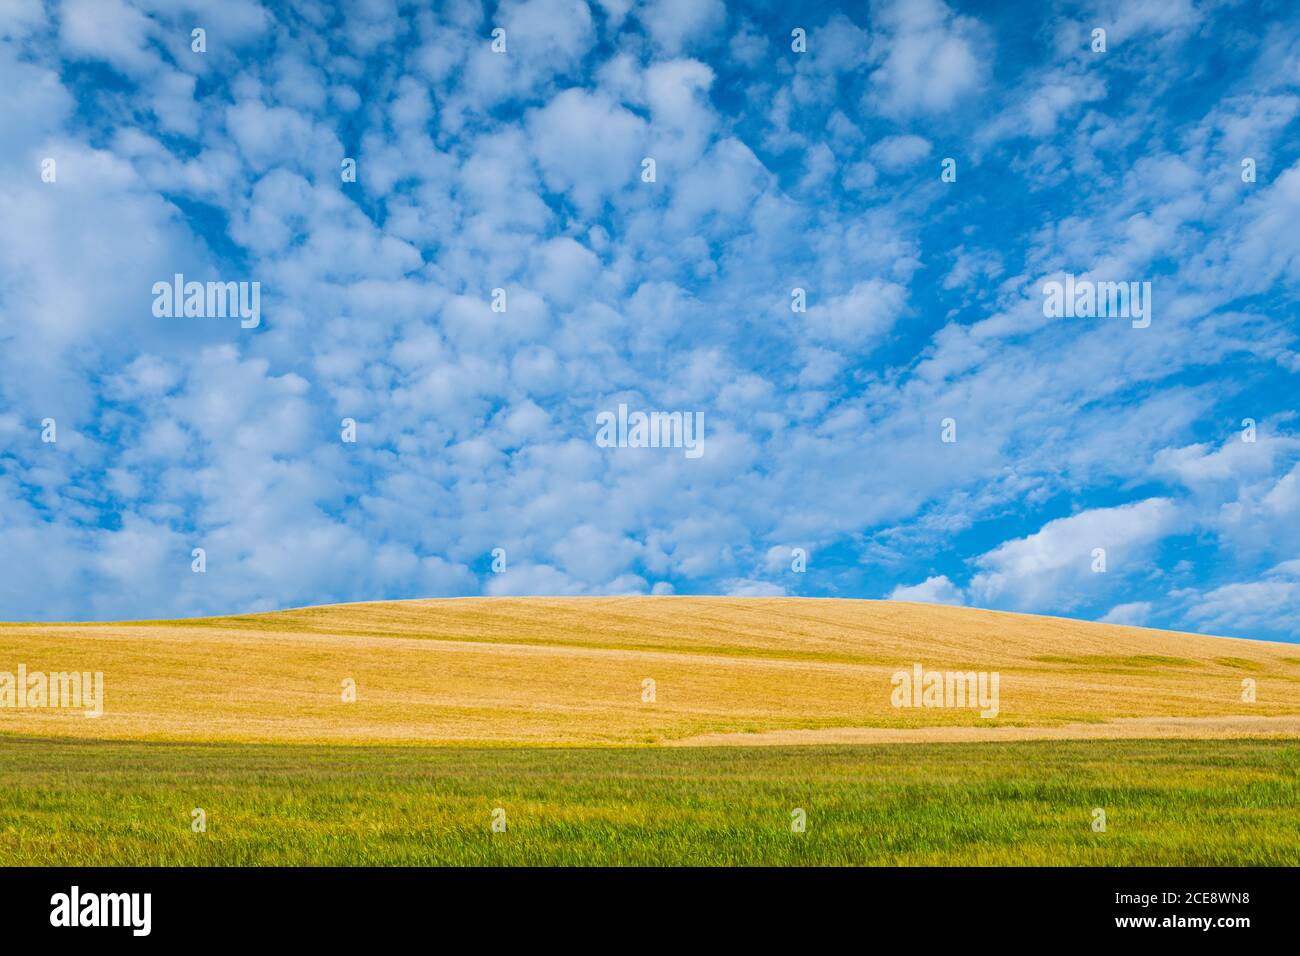 A dappled blue sky above a hill in a field. Stock Photo